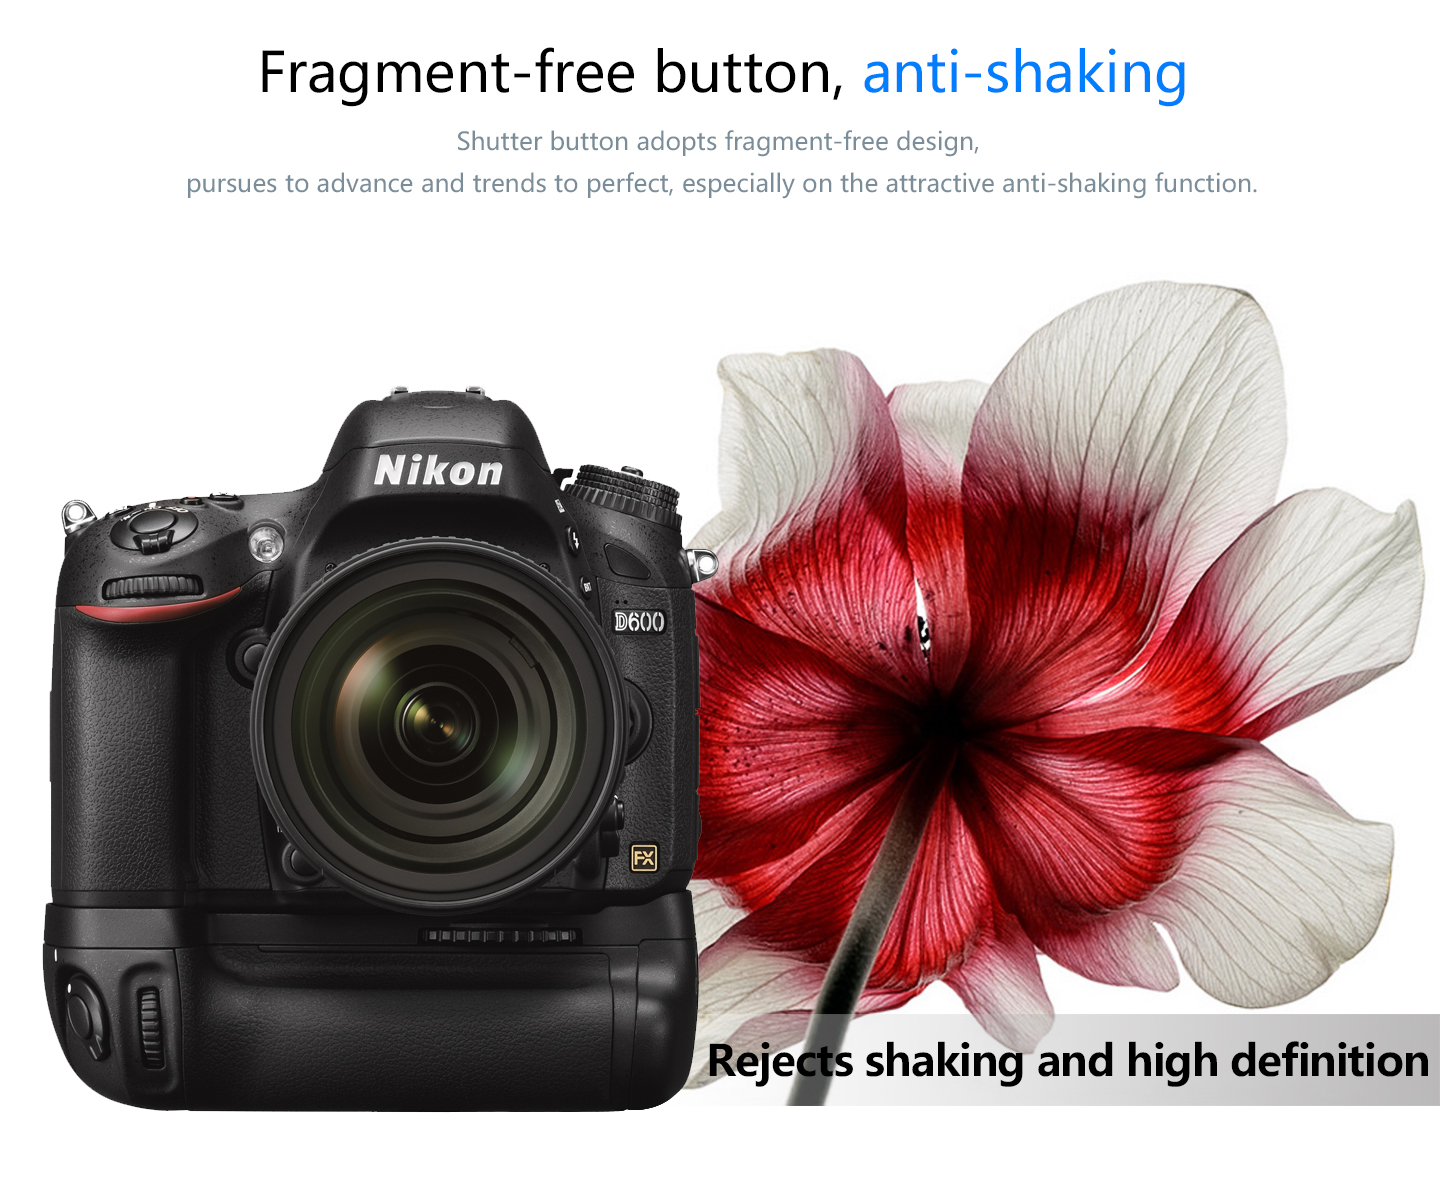 Frament-free button, anti-shaking